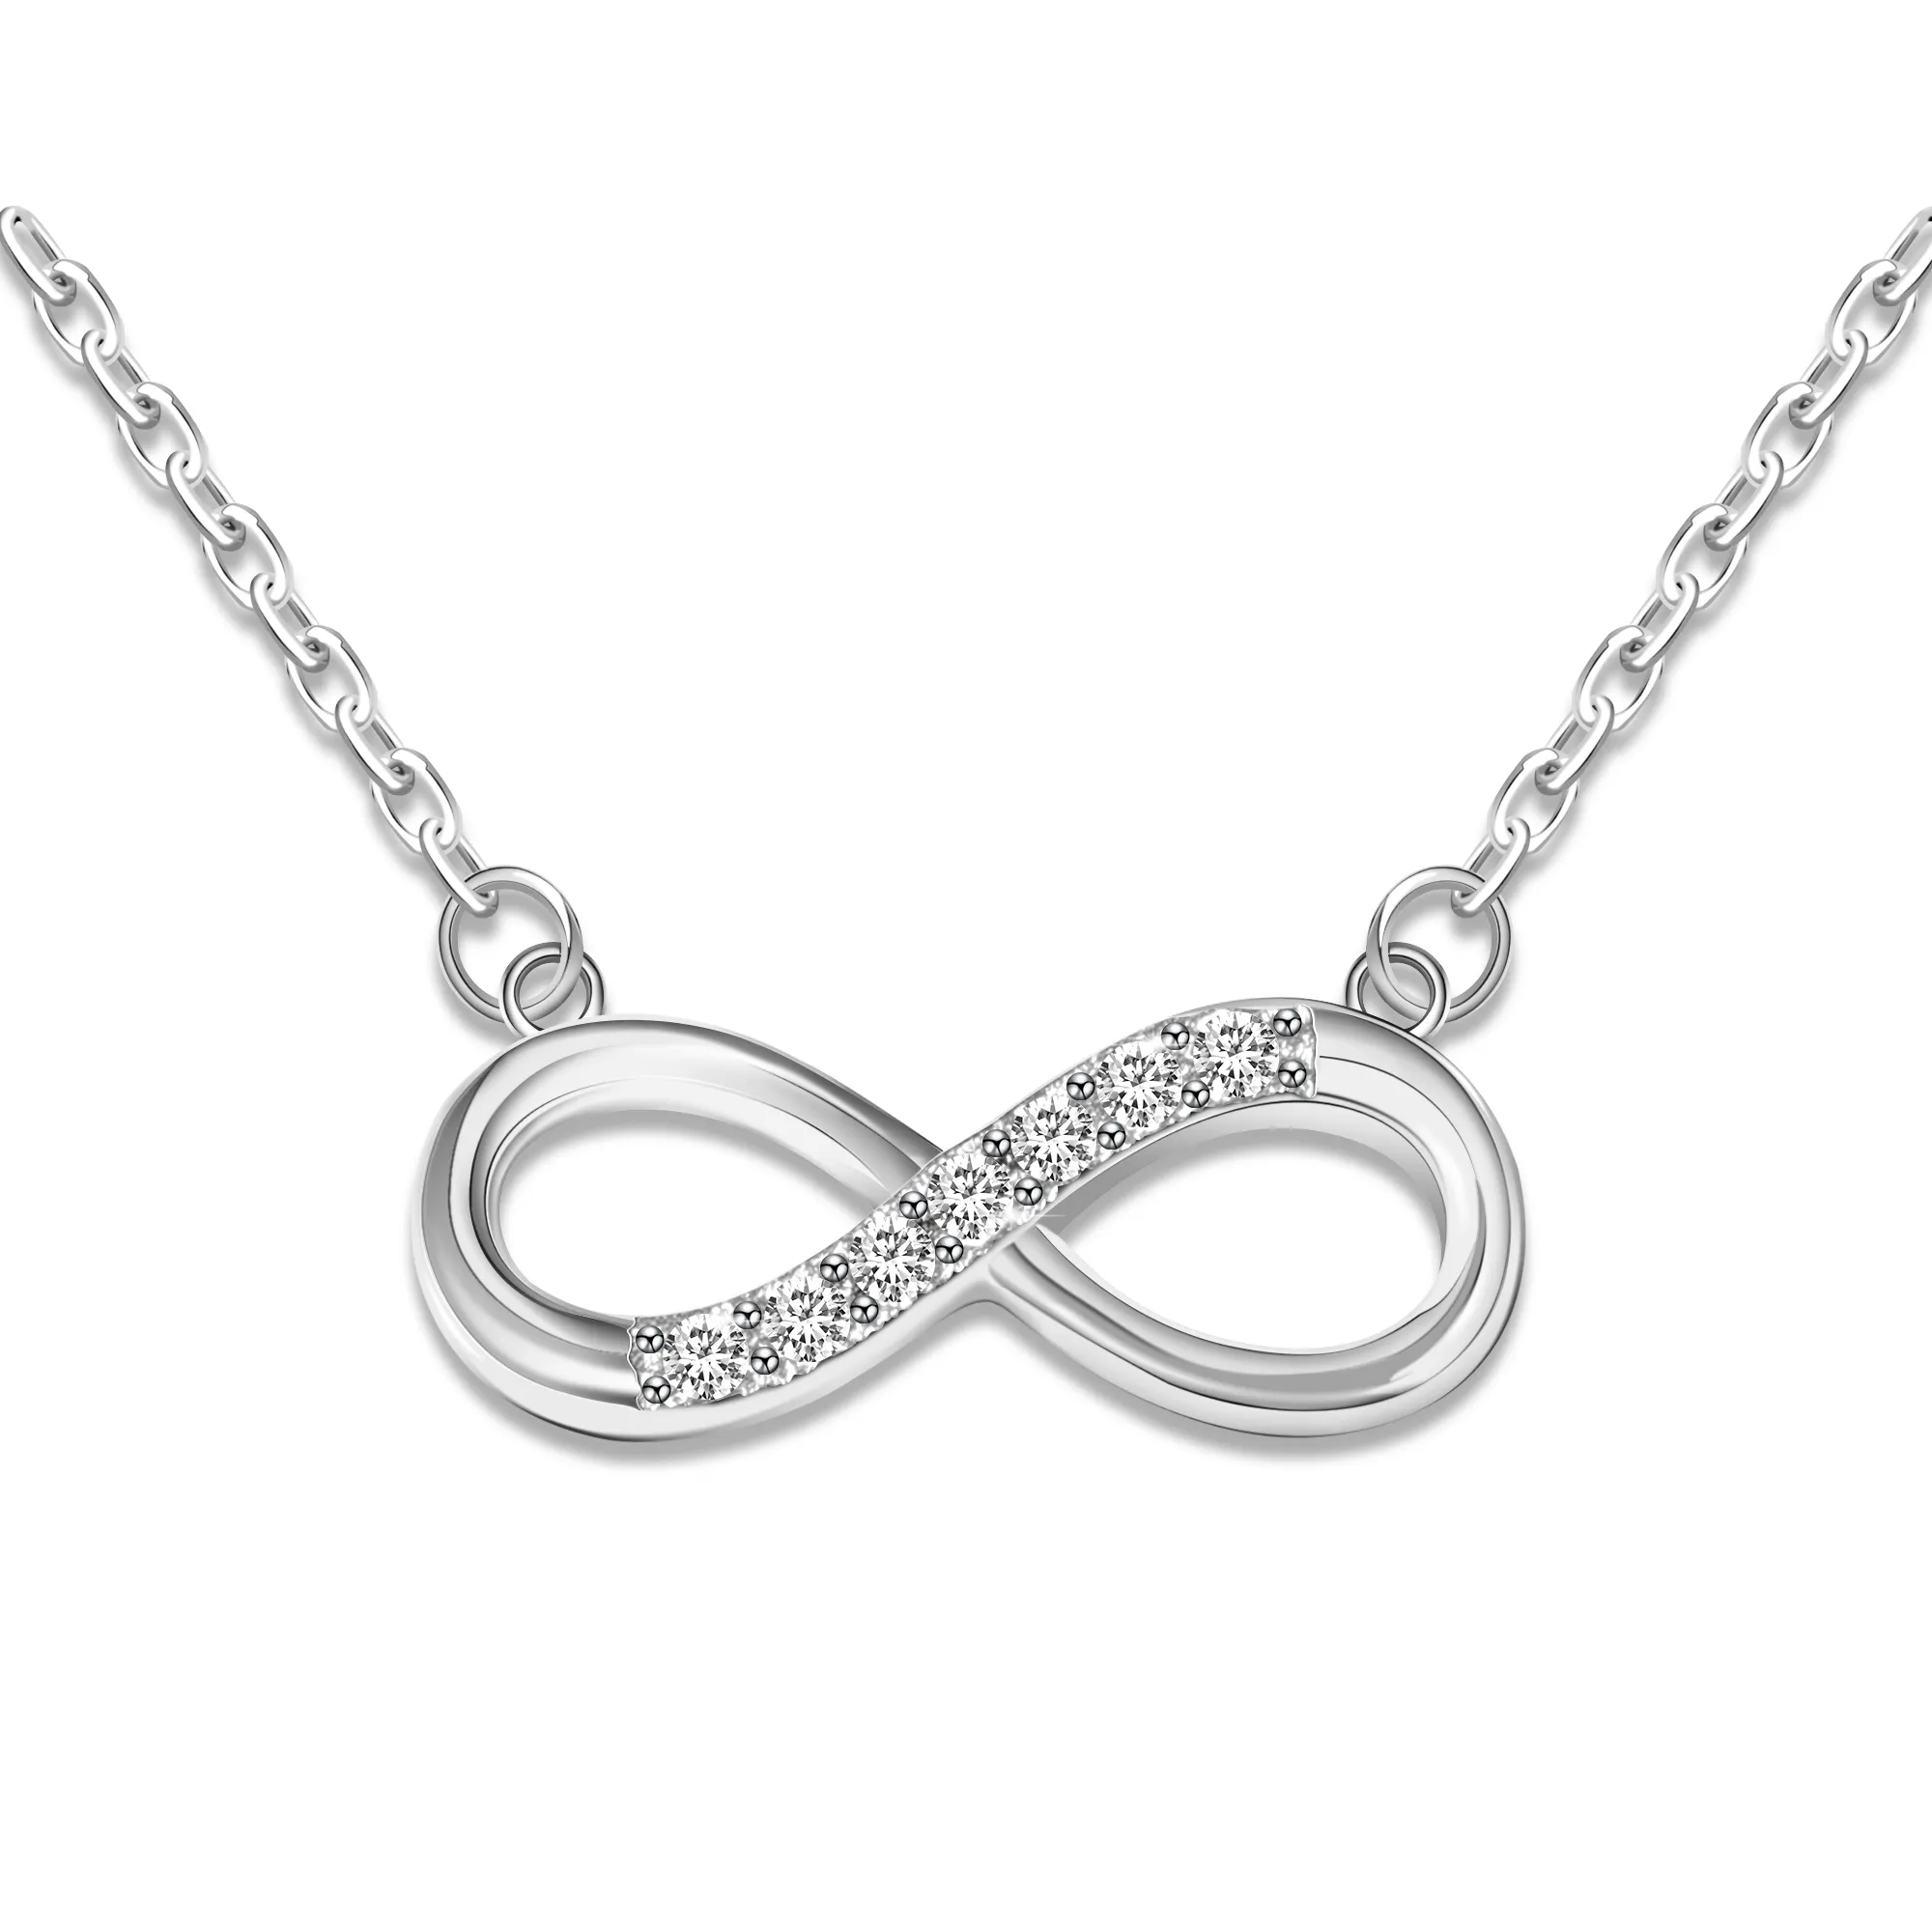 Moda mulheres clássico bonito designs AAA pedra cz infinito símbolo do amor 925 prata esterlina jóias colar